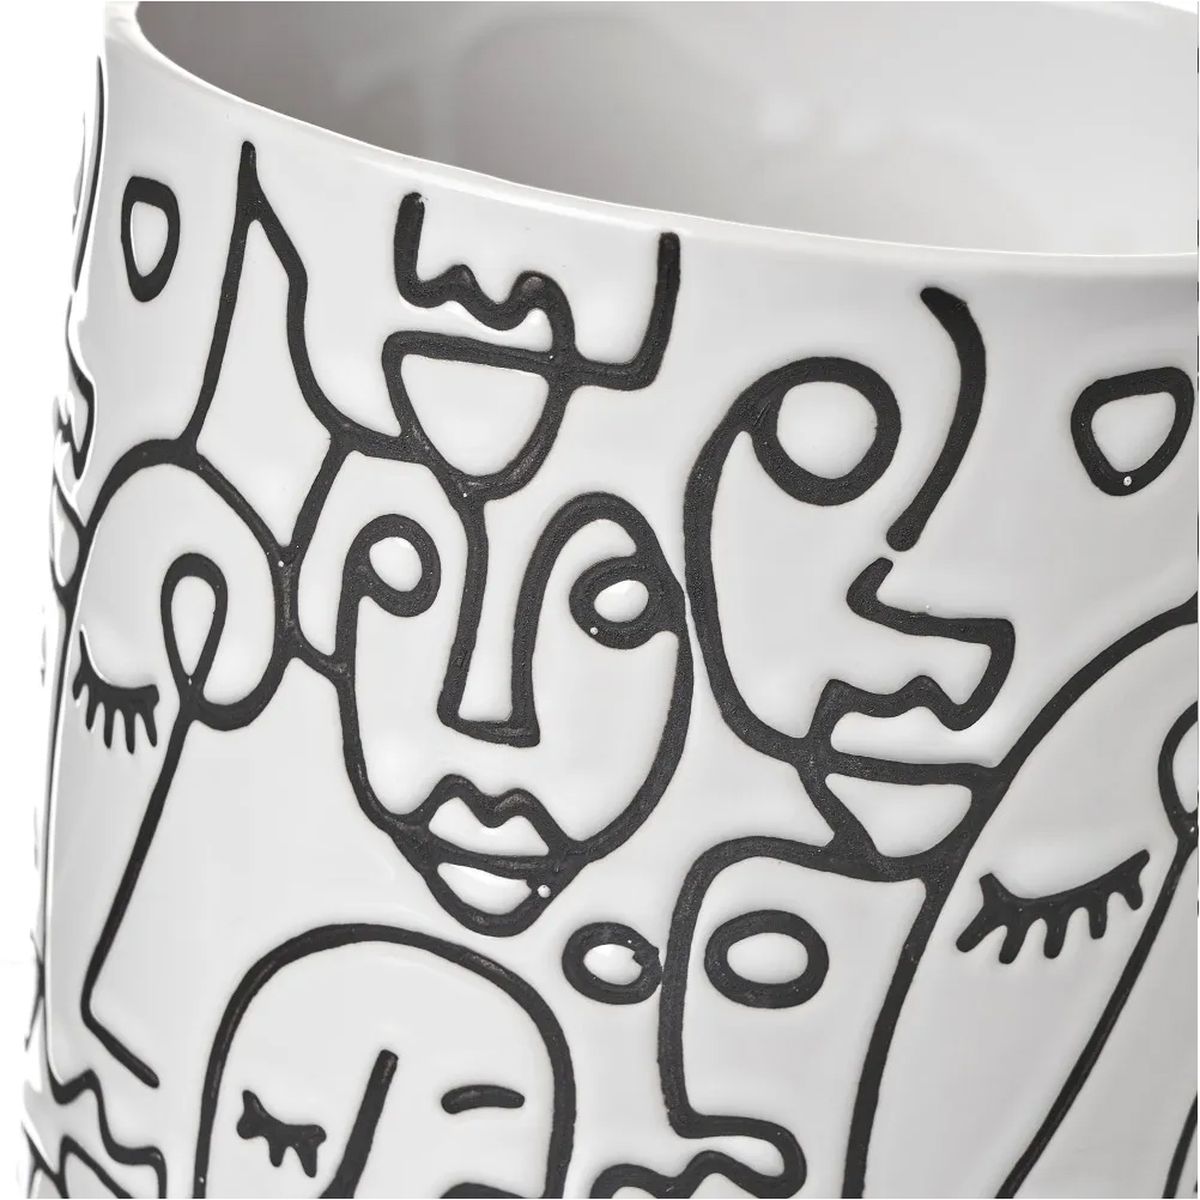 Cachepot Arty in white ceramic